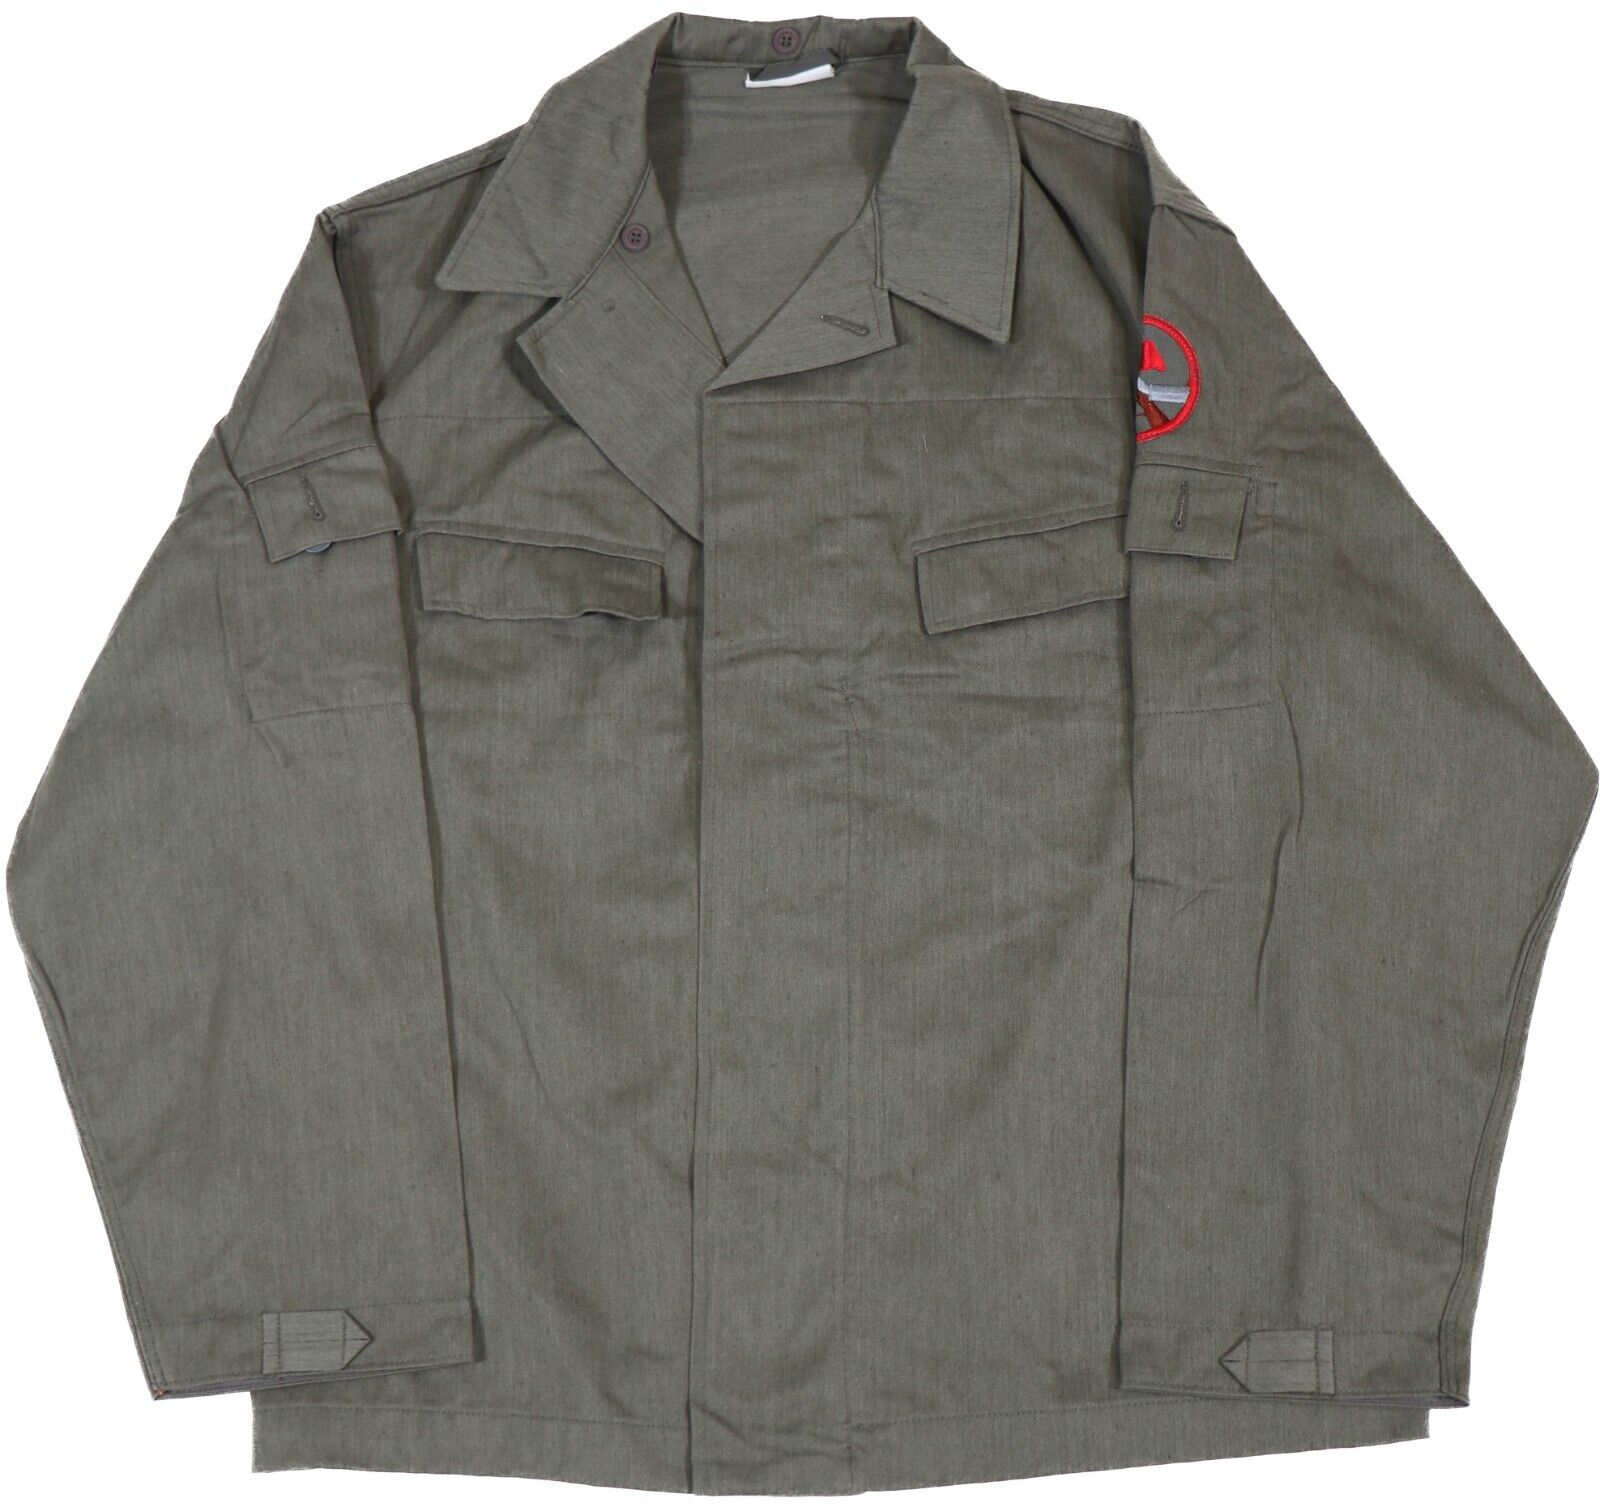 XLarge - East German Kampfgruppen OD Summer Issue Jacket Uniform DDR NVA Shirt